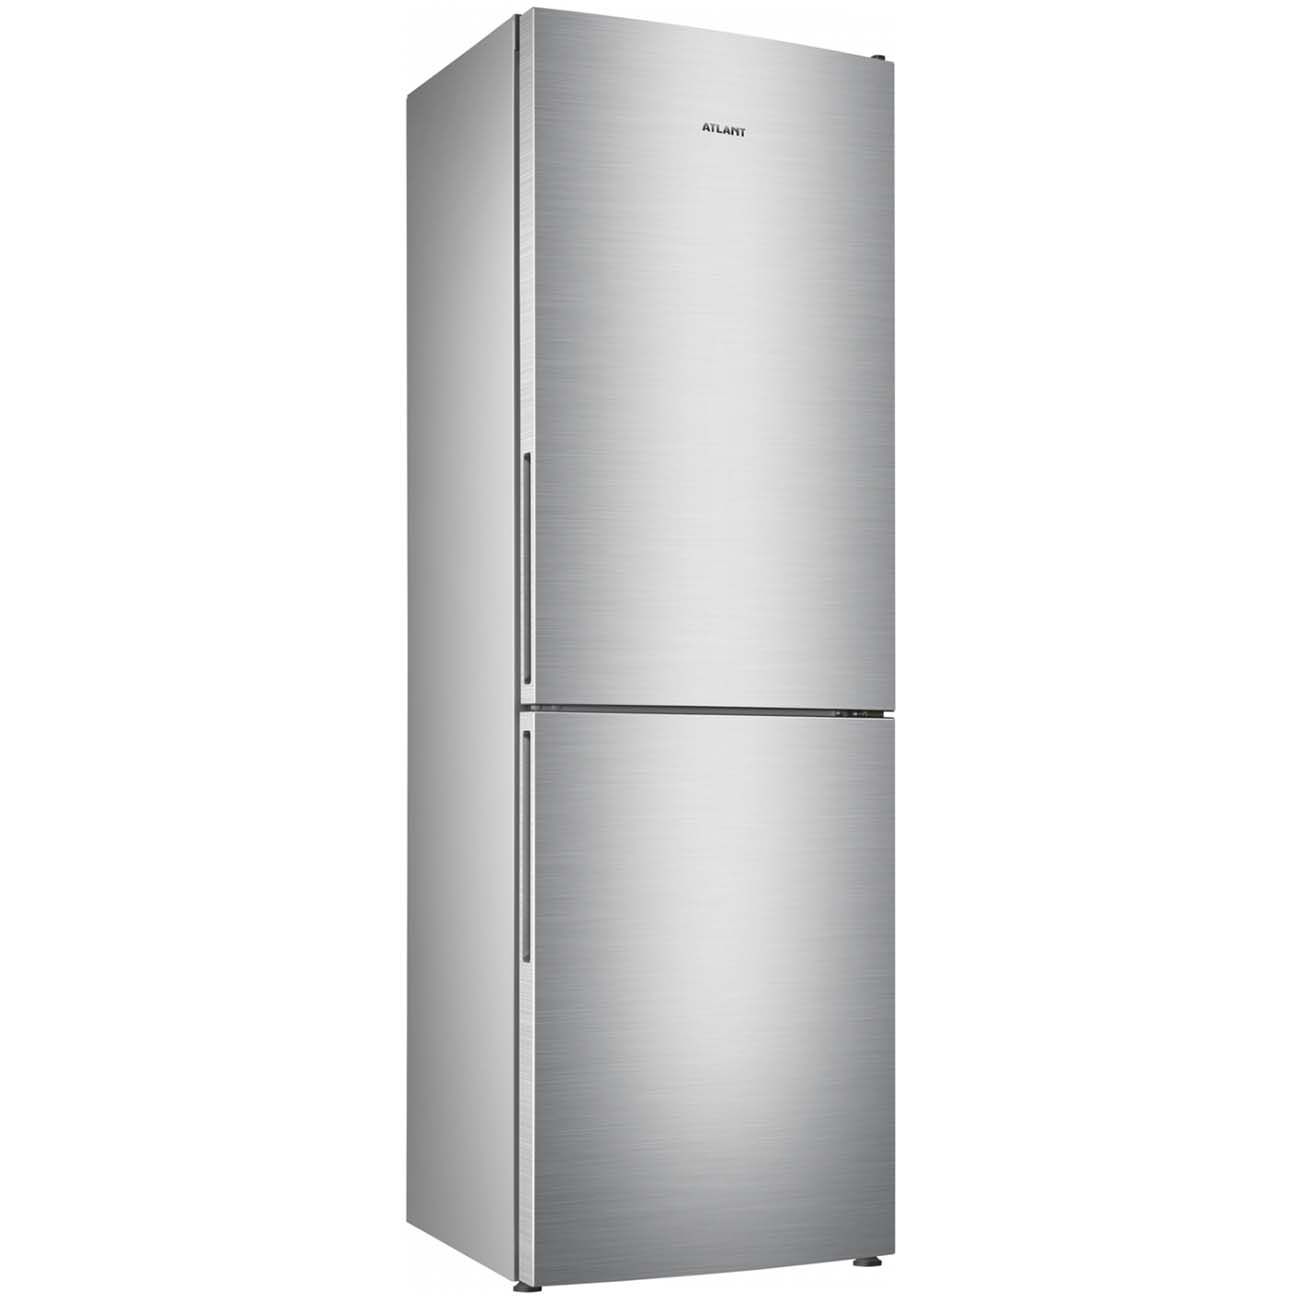 Холодильник ру атлант. Холодильник XM 6026-080 ATLANT. Холодильник ATLANT хм 4621-141. Холодильник Атлант 4624-141. Холодильник Атлант хм 4625-141.